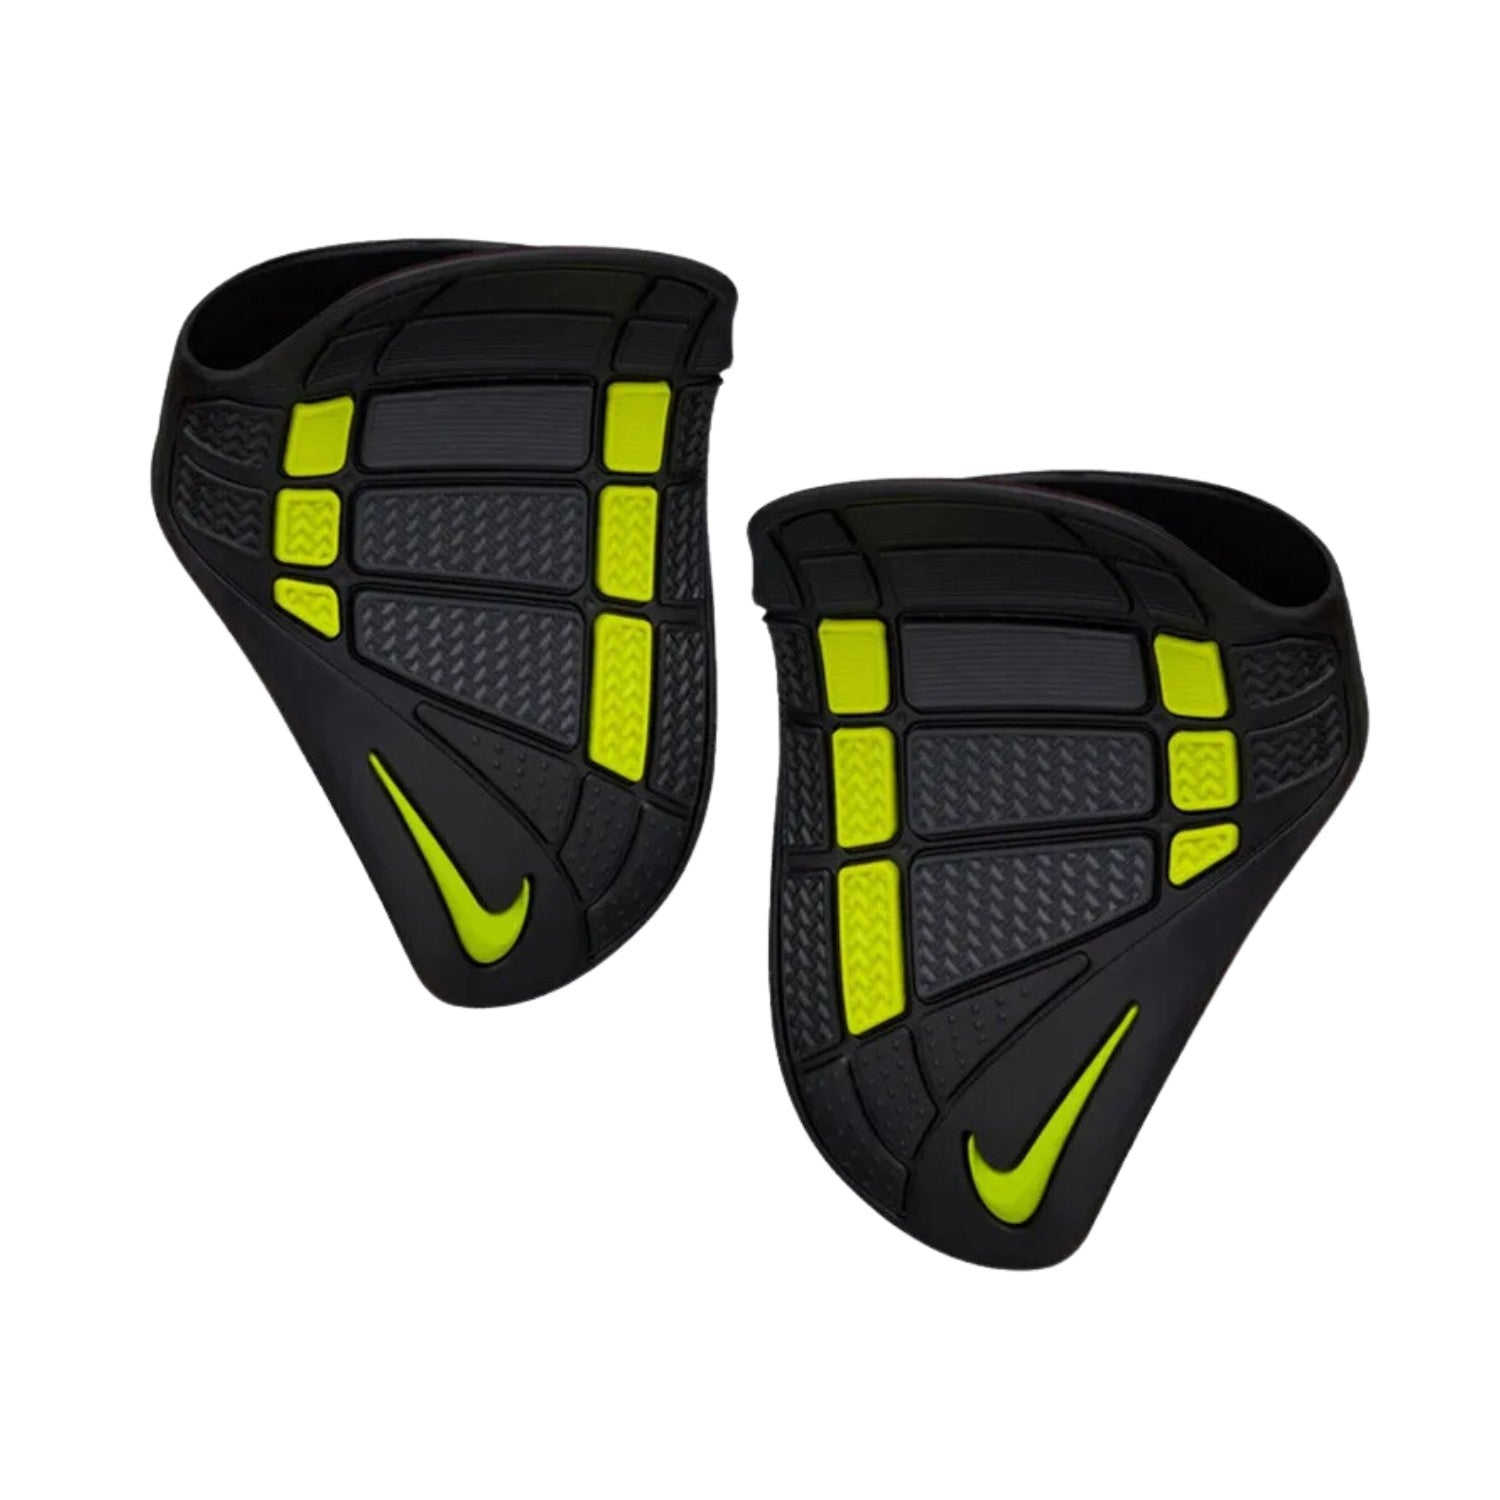 Nike Alpha Lifting Grip Unisex Style : Nlg66